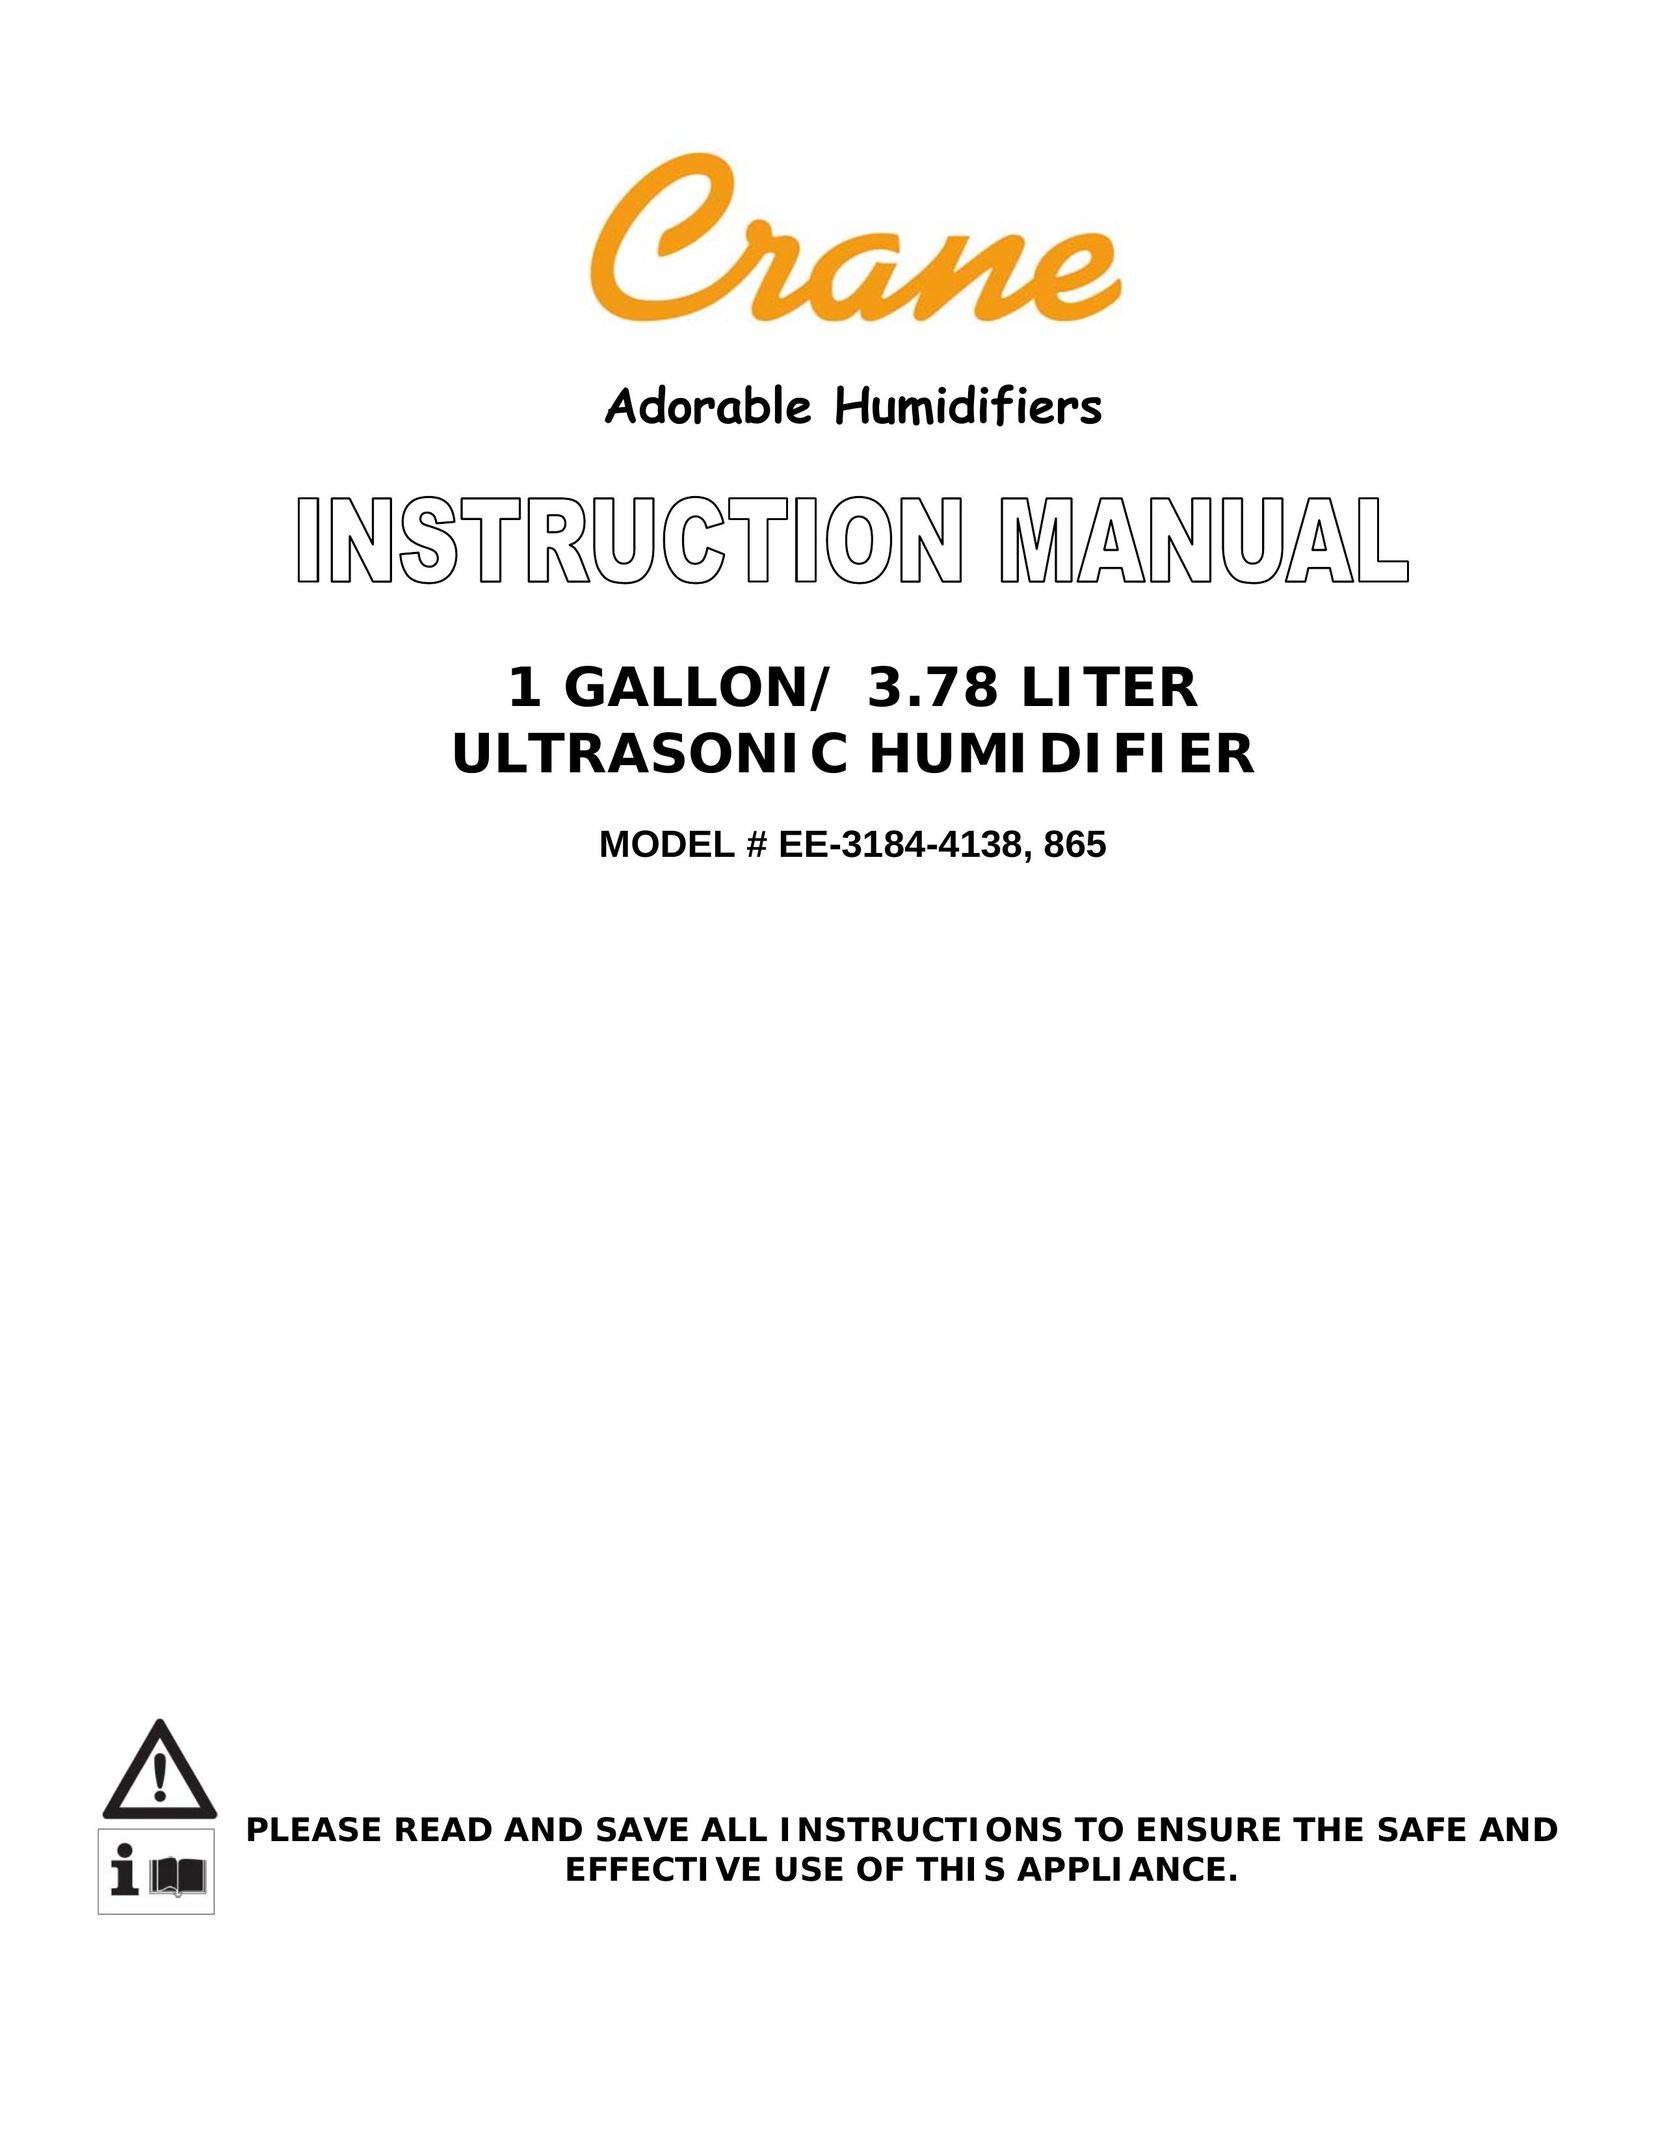 Crane EE-3184-4138 Humidifier User Manual